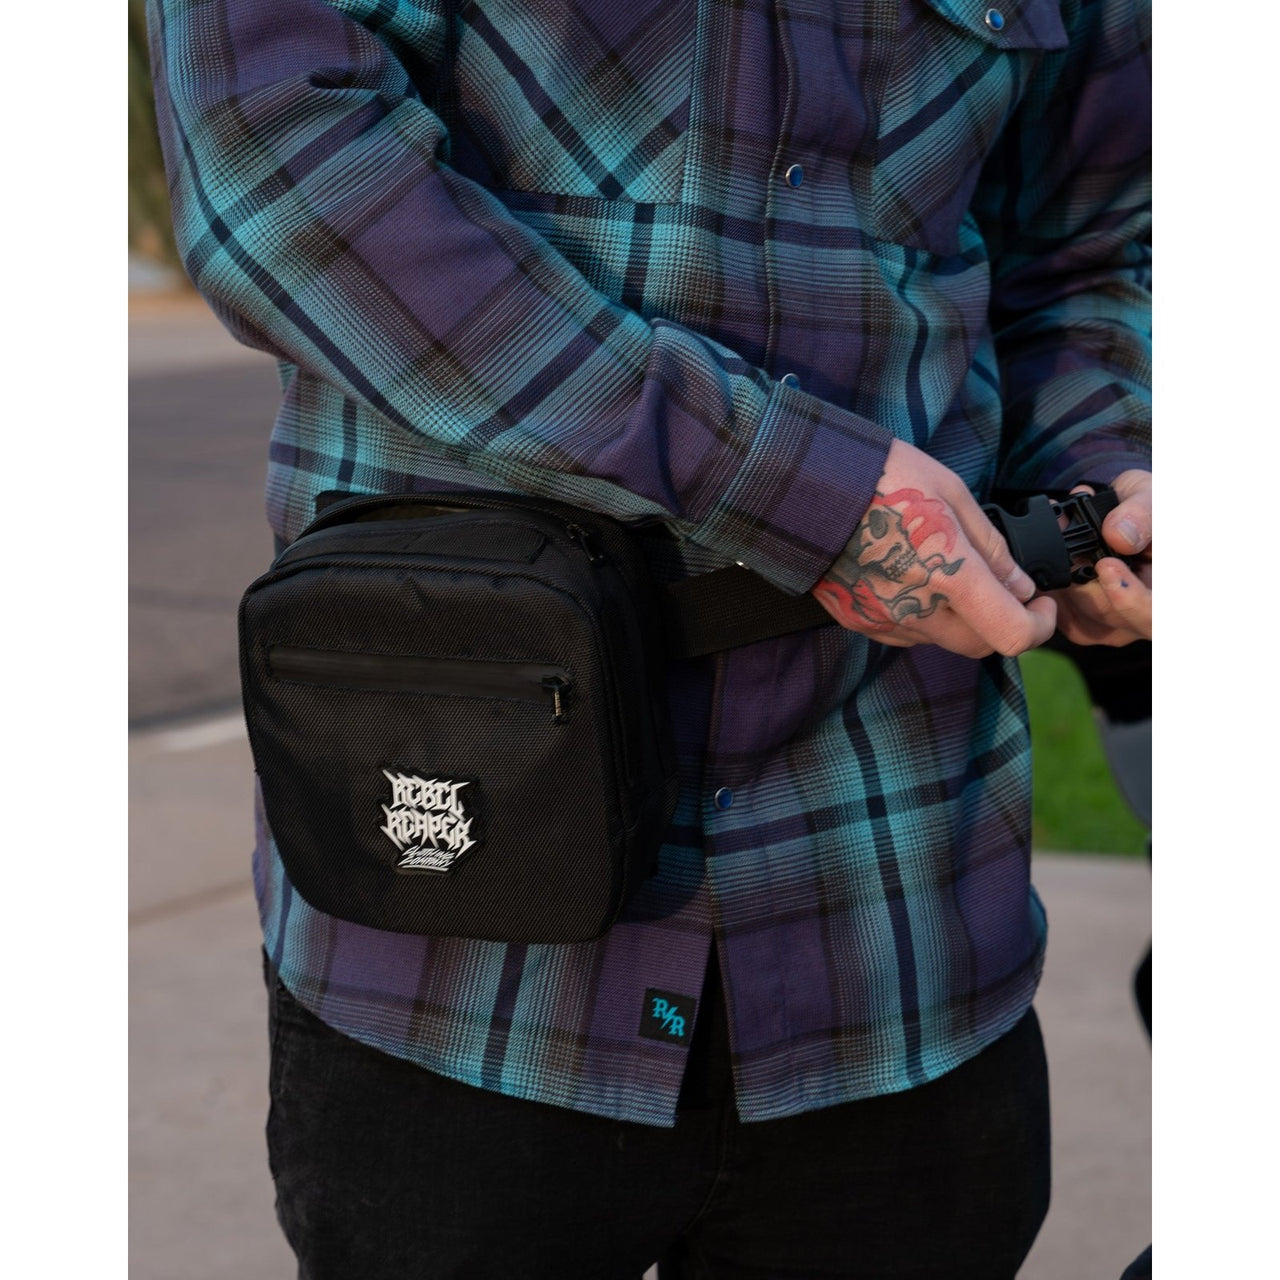 Handle Bar Bag - Waterproof Conceal Carry - Rebel Reaper Clothing CompanyHandle Bar Bag